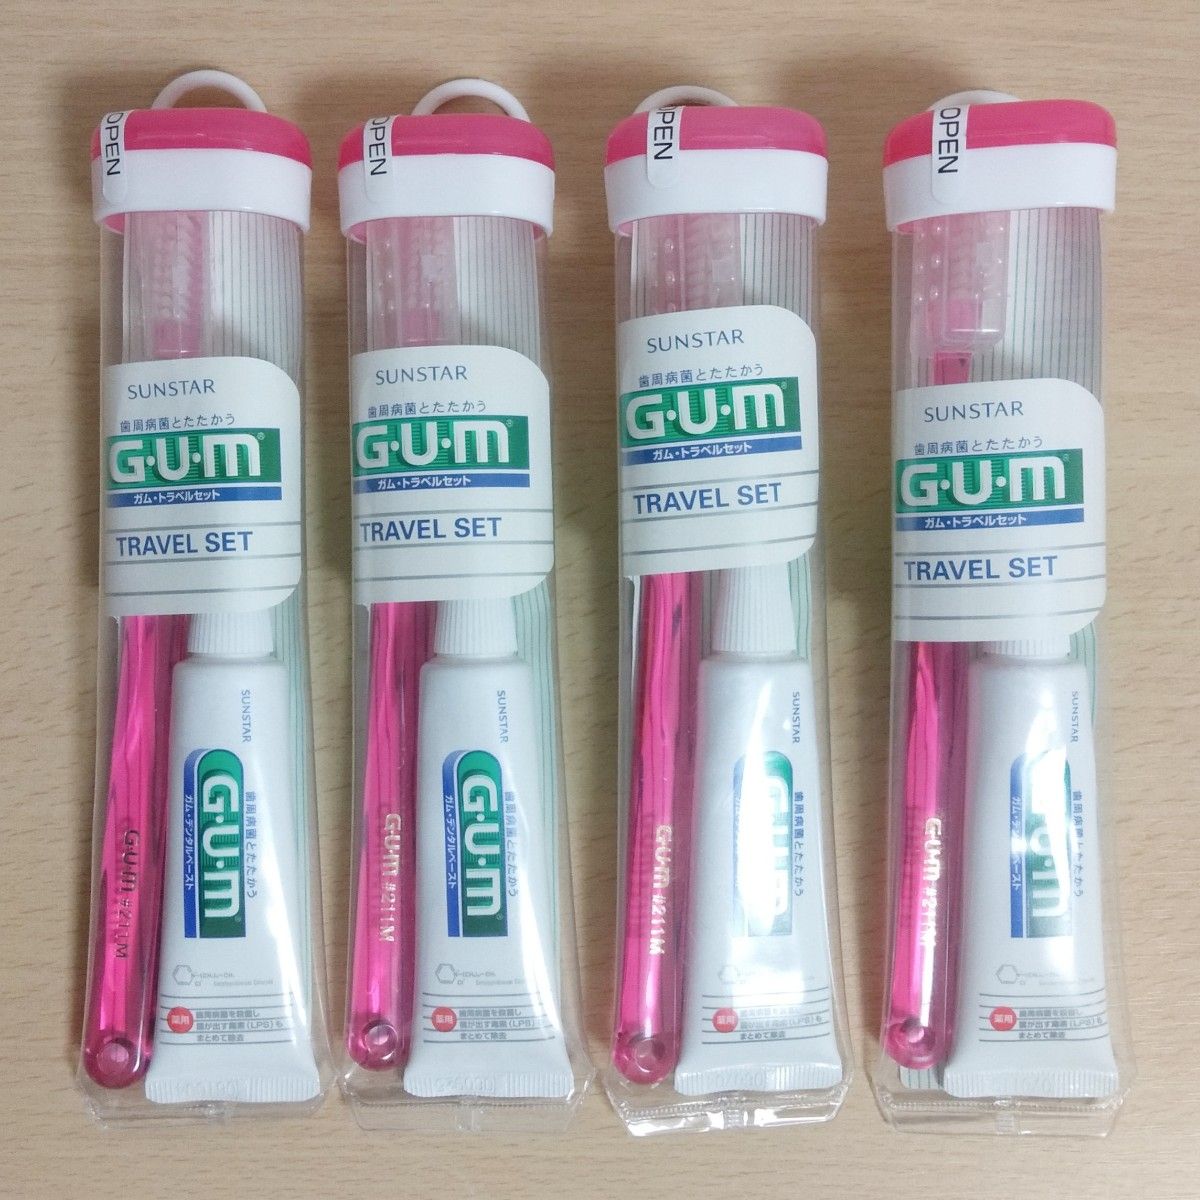 SUNSTAR サンスター G・U・M ガム トラベルセット 4個 歯周病予防 GUM 歯ブラシ 歯磨き粉 旅行 出張 お泊り